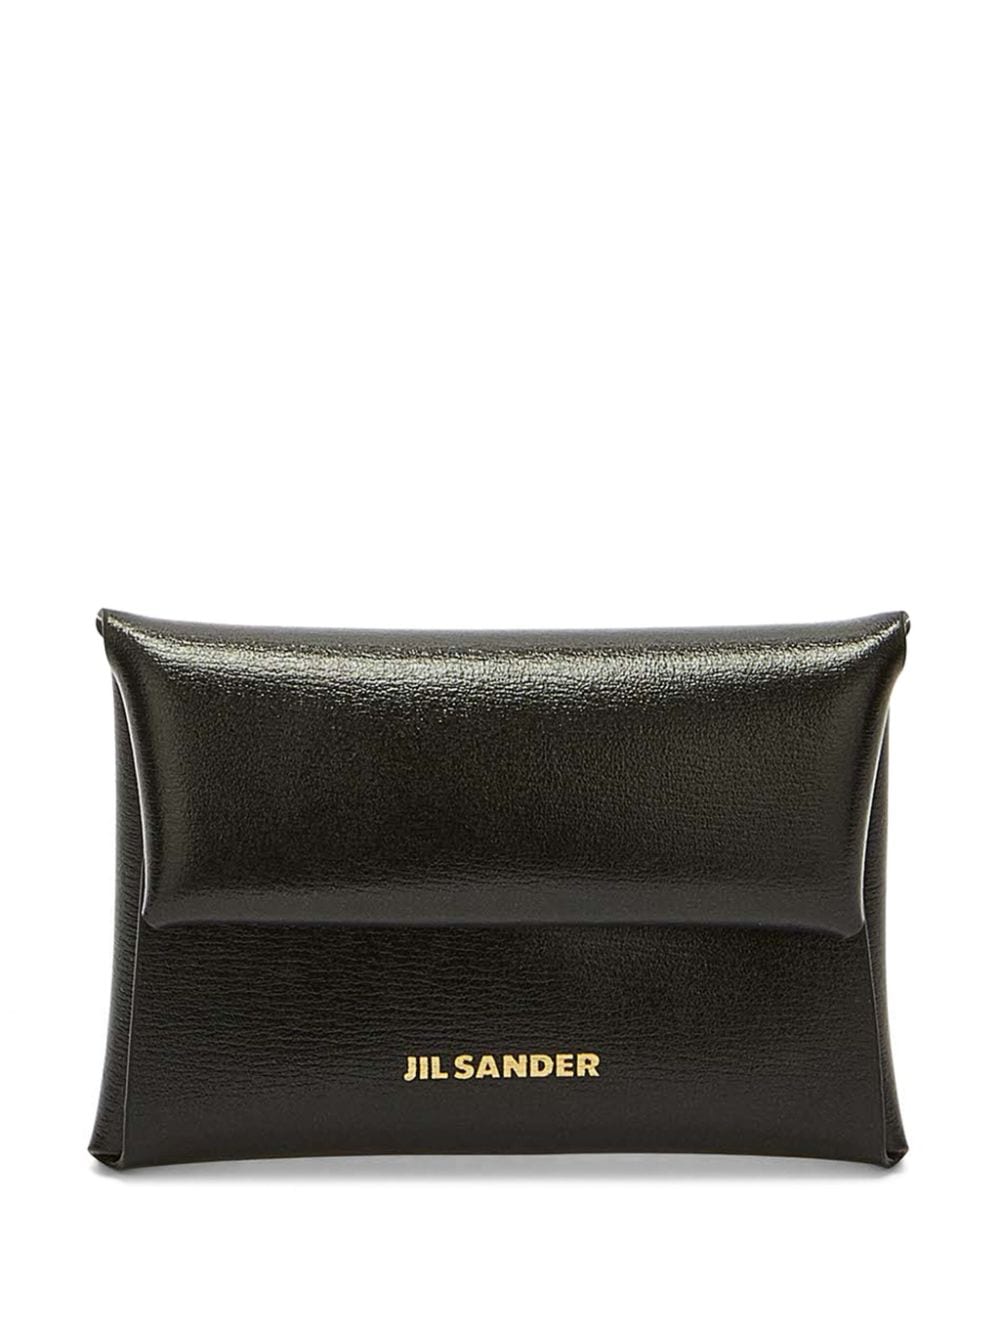 Jil Sander Mini Coin Purse Leather Wallet In Black